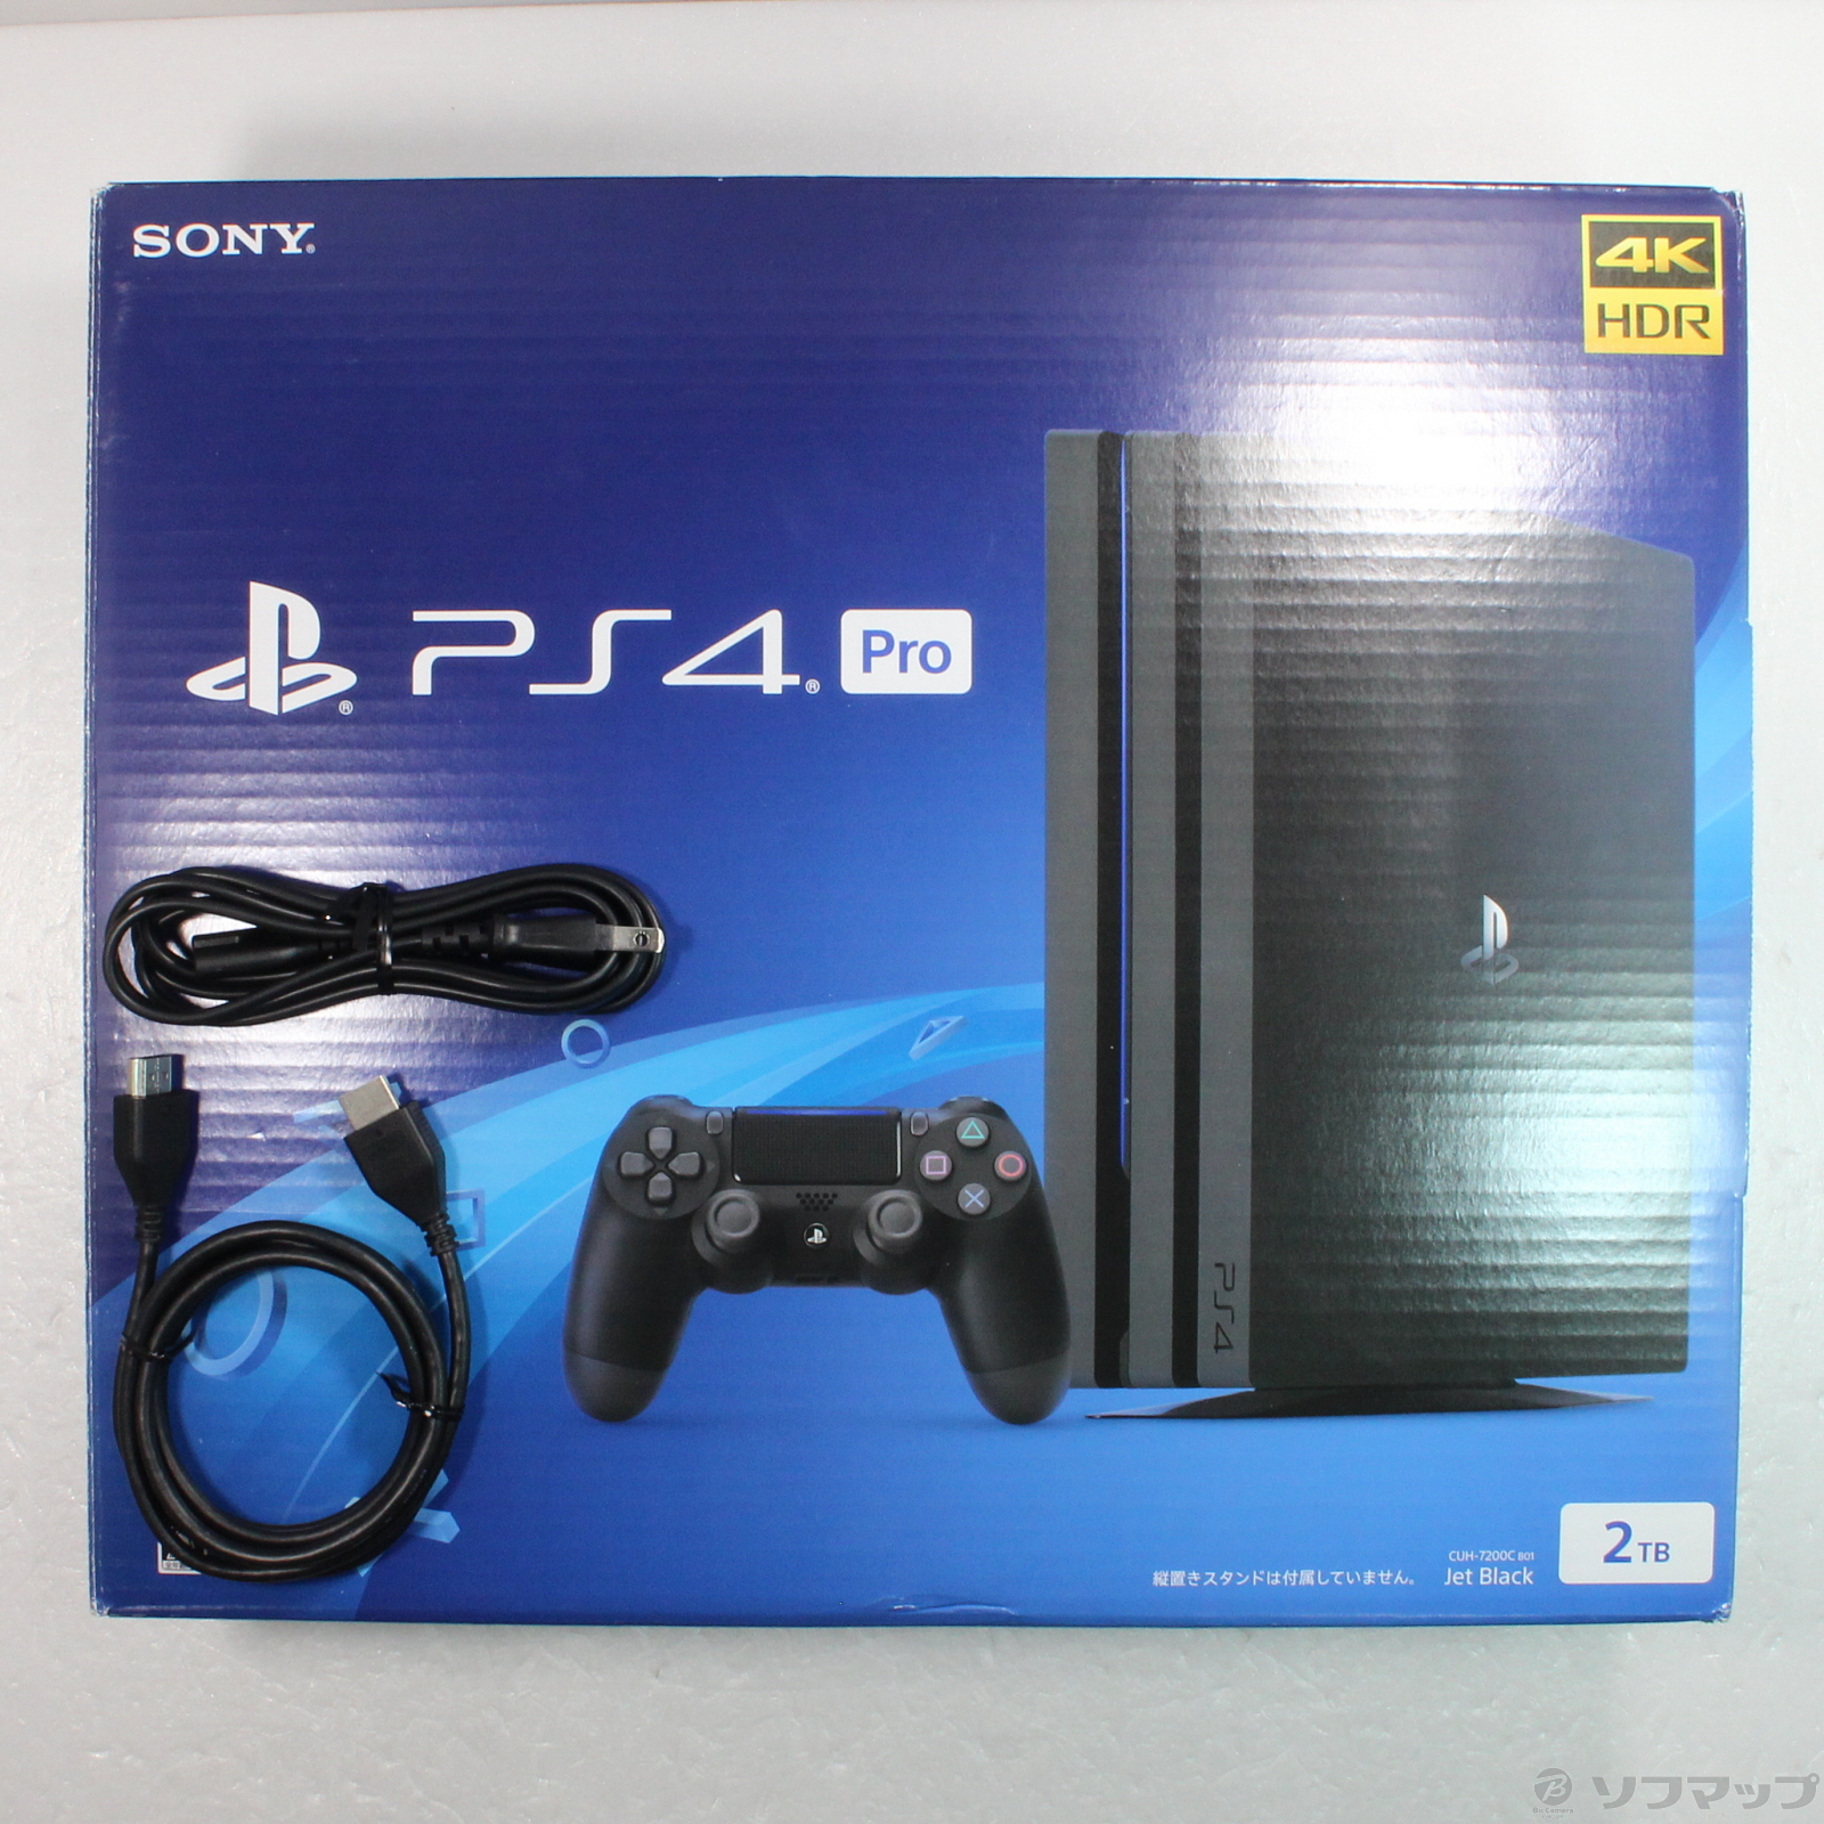 SONY PlayStation4 pro CUH-7200C 2TB PS4 - www.sorbillomenu.com